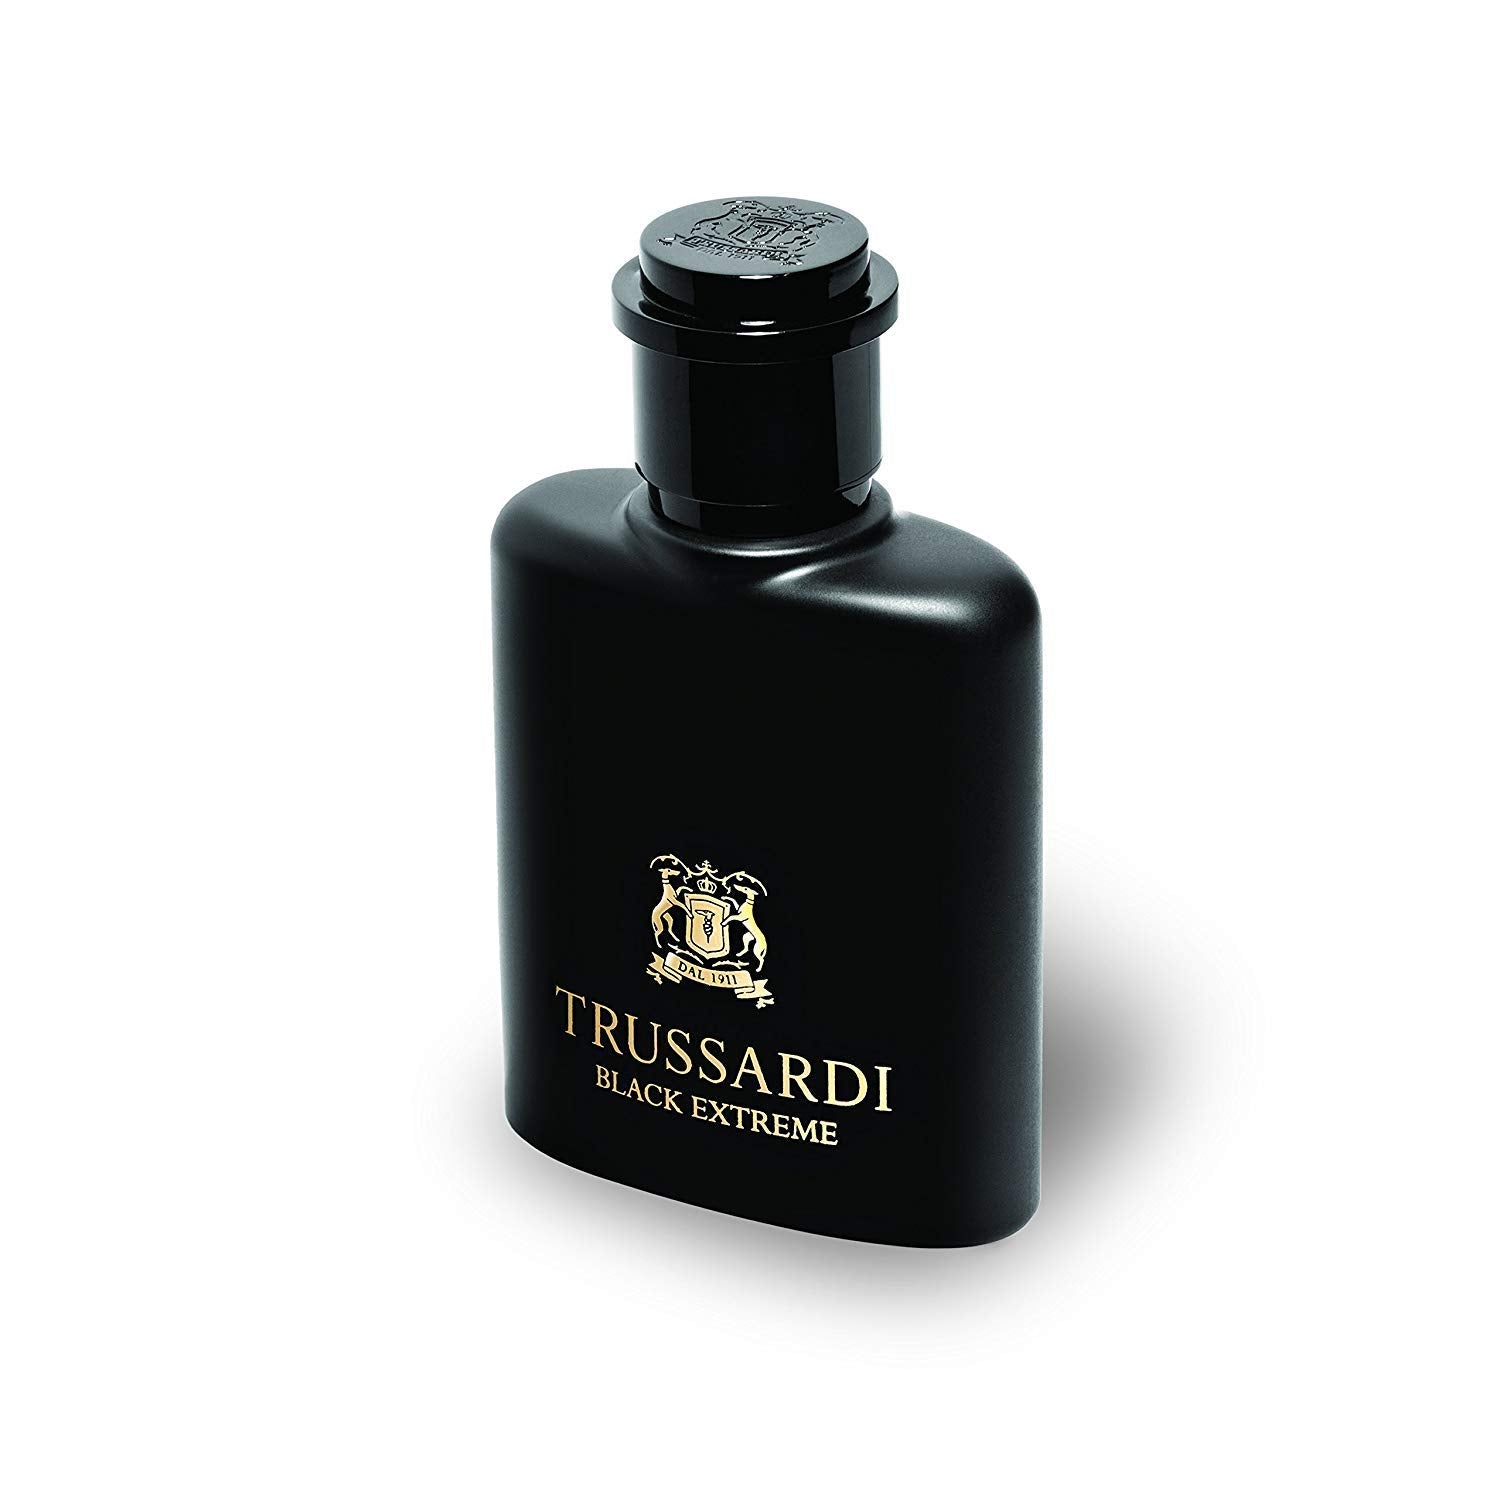 Photos - Men's Fragrance Trussardi Black Extreme Eau de Toilette 30ml Spray - Peacock Bazaar C28116 